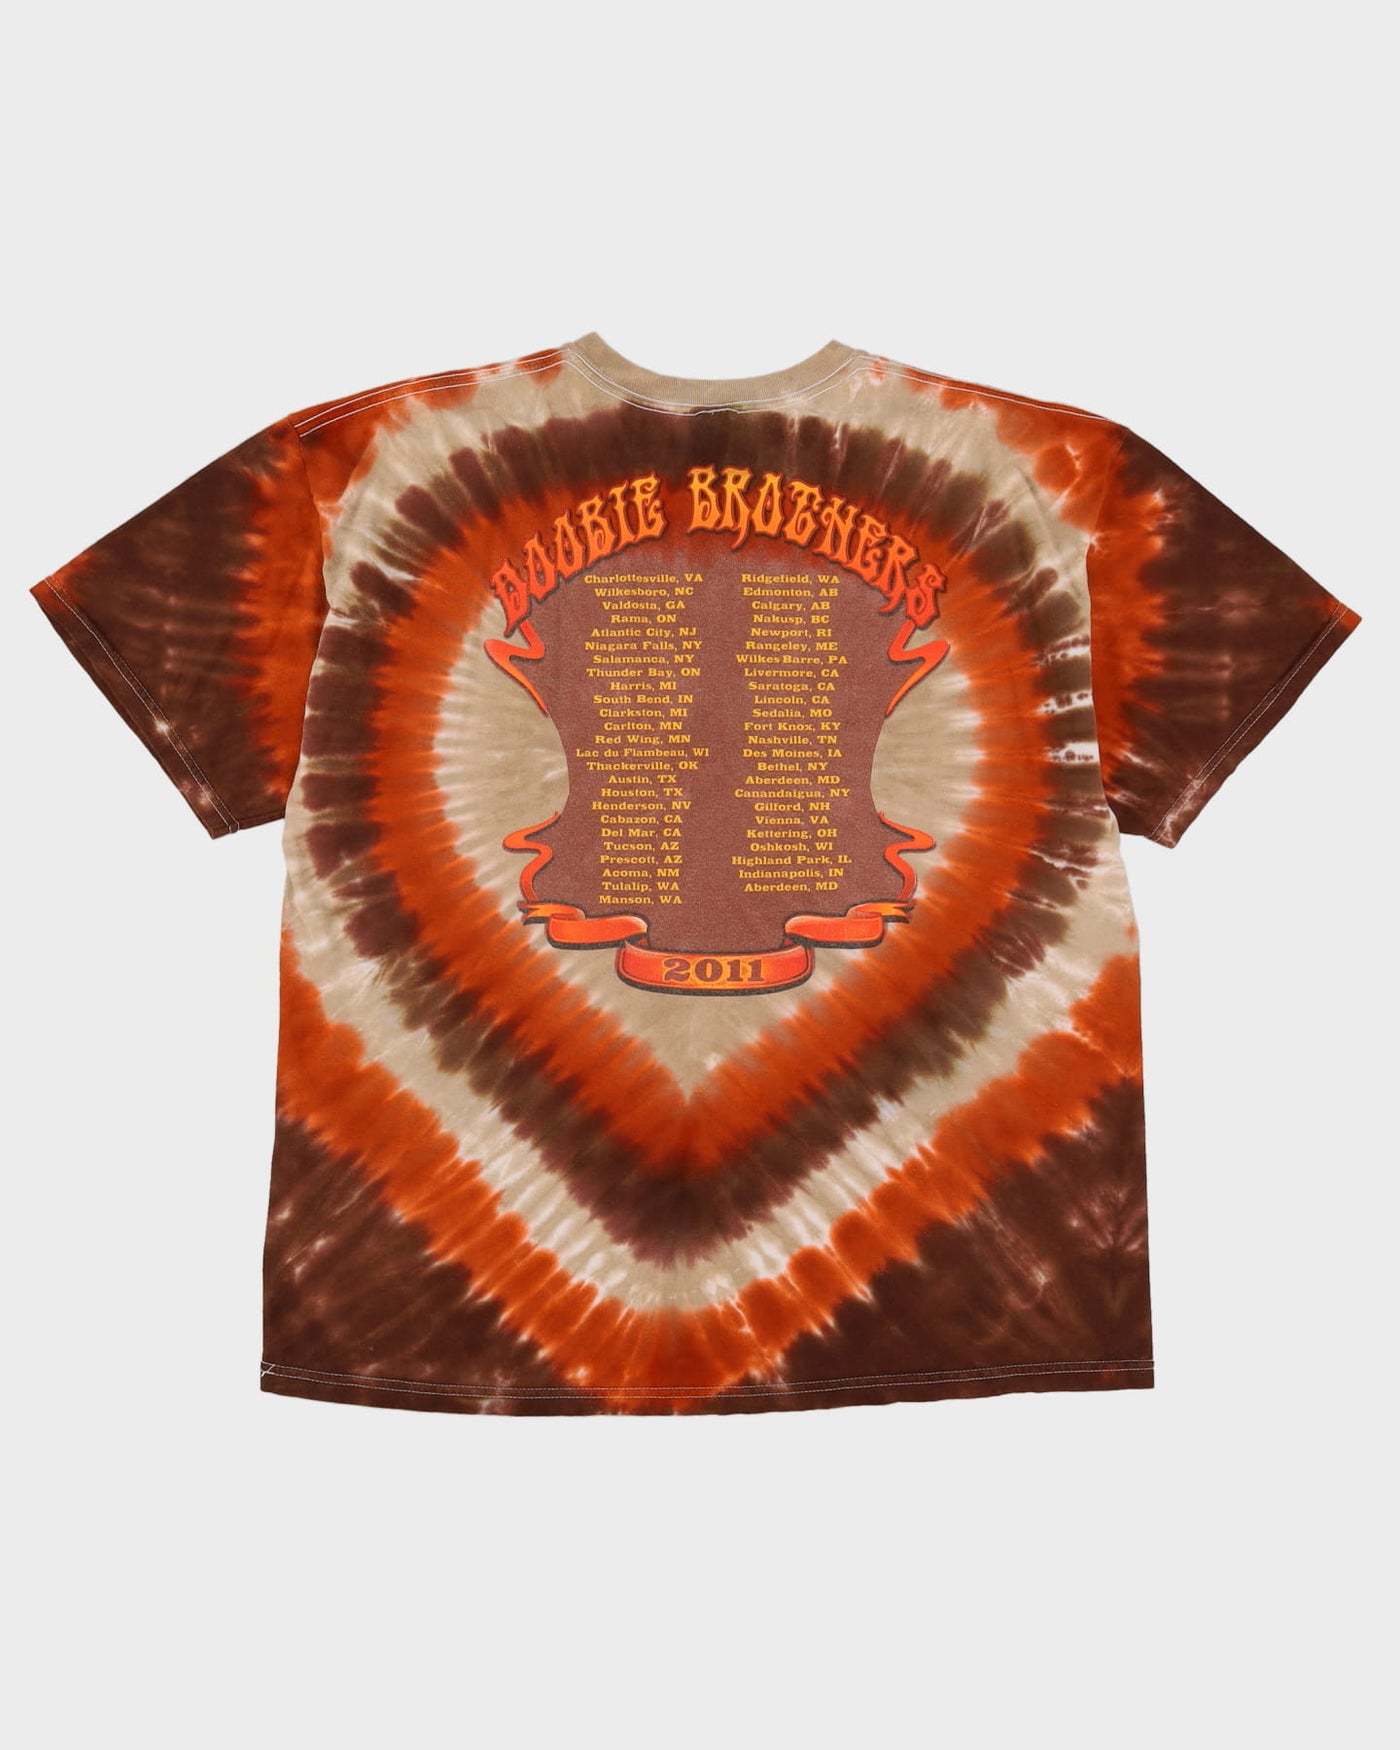 2011 Doobie Brothers Tie Dye Band Tour T-Shirt - XL